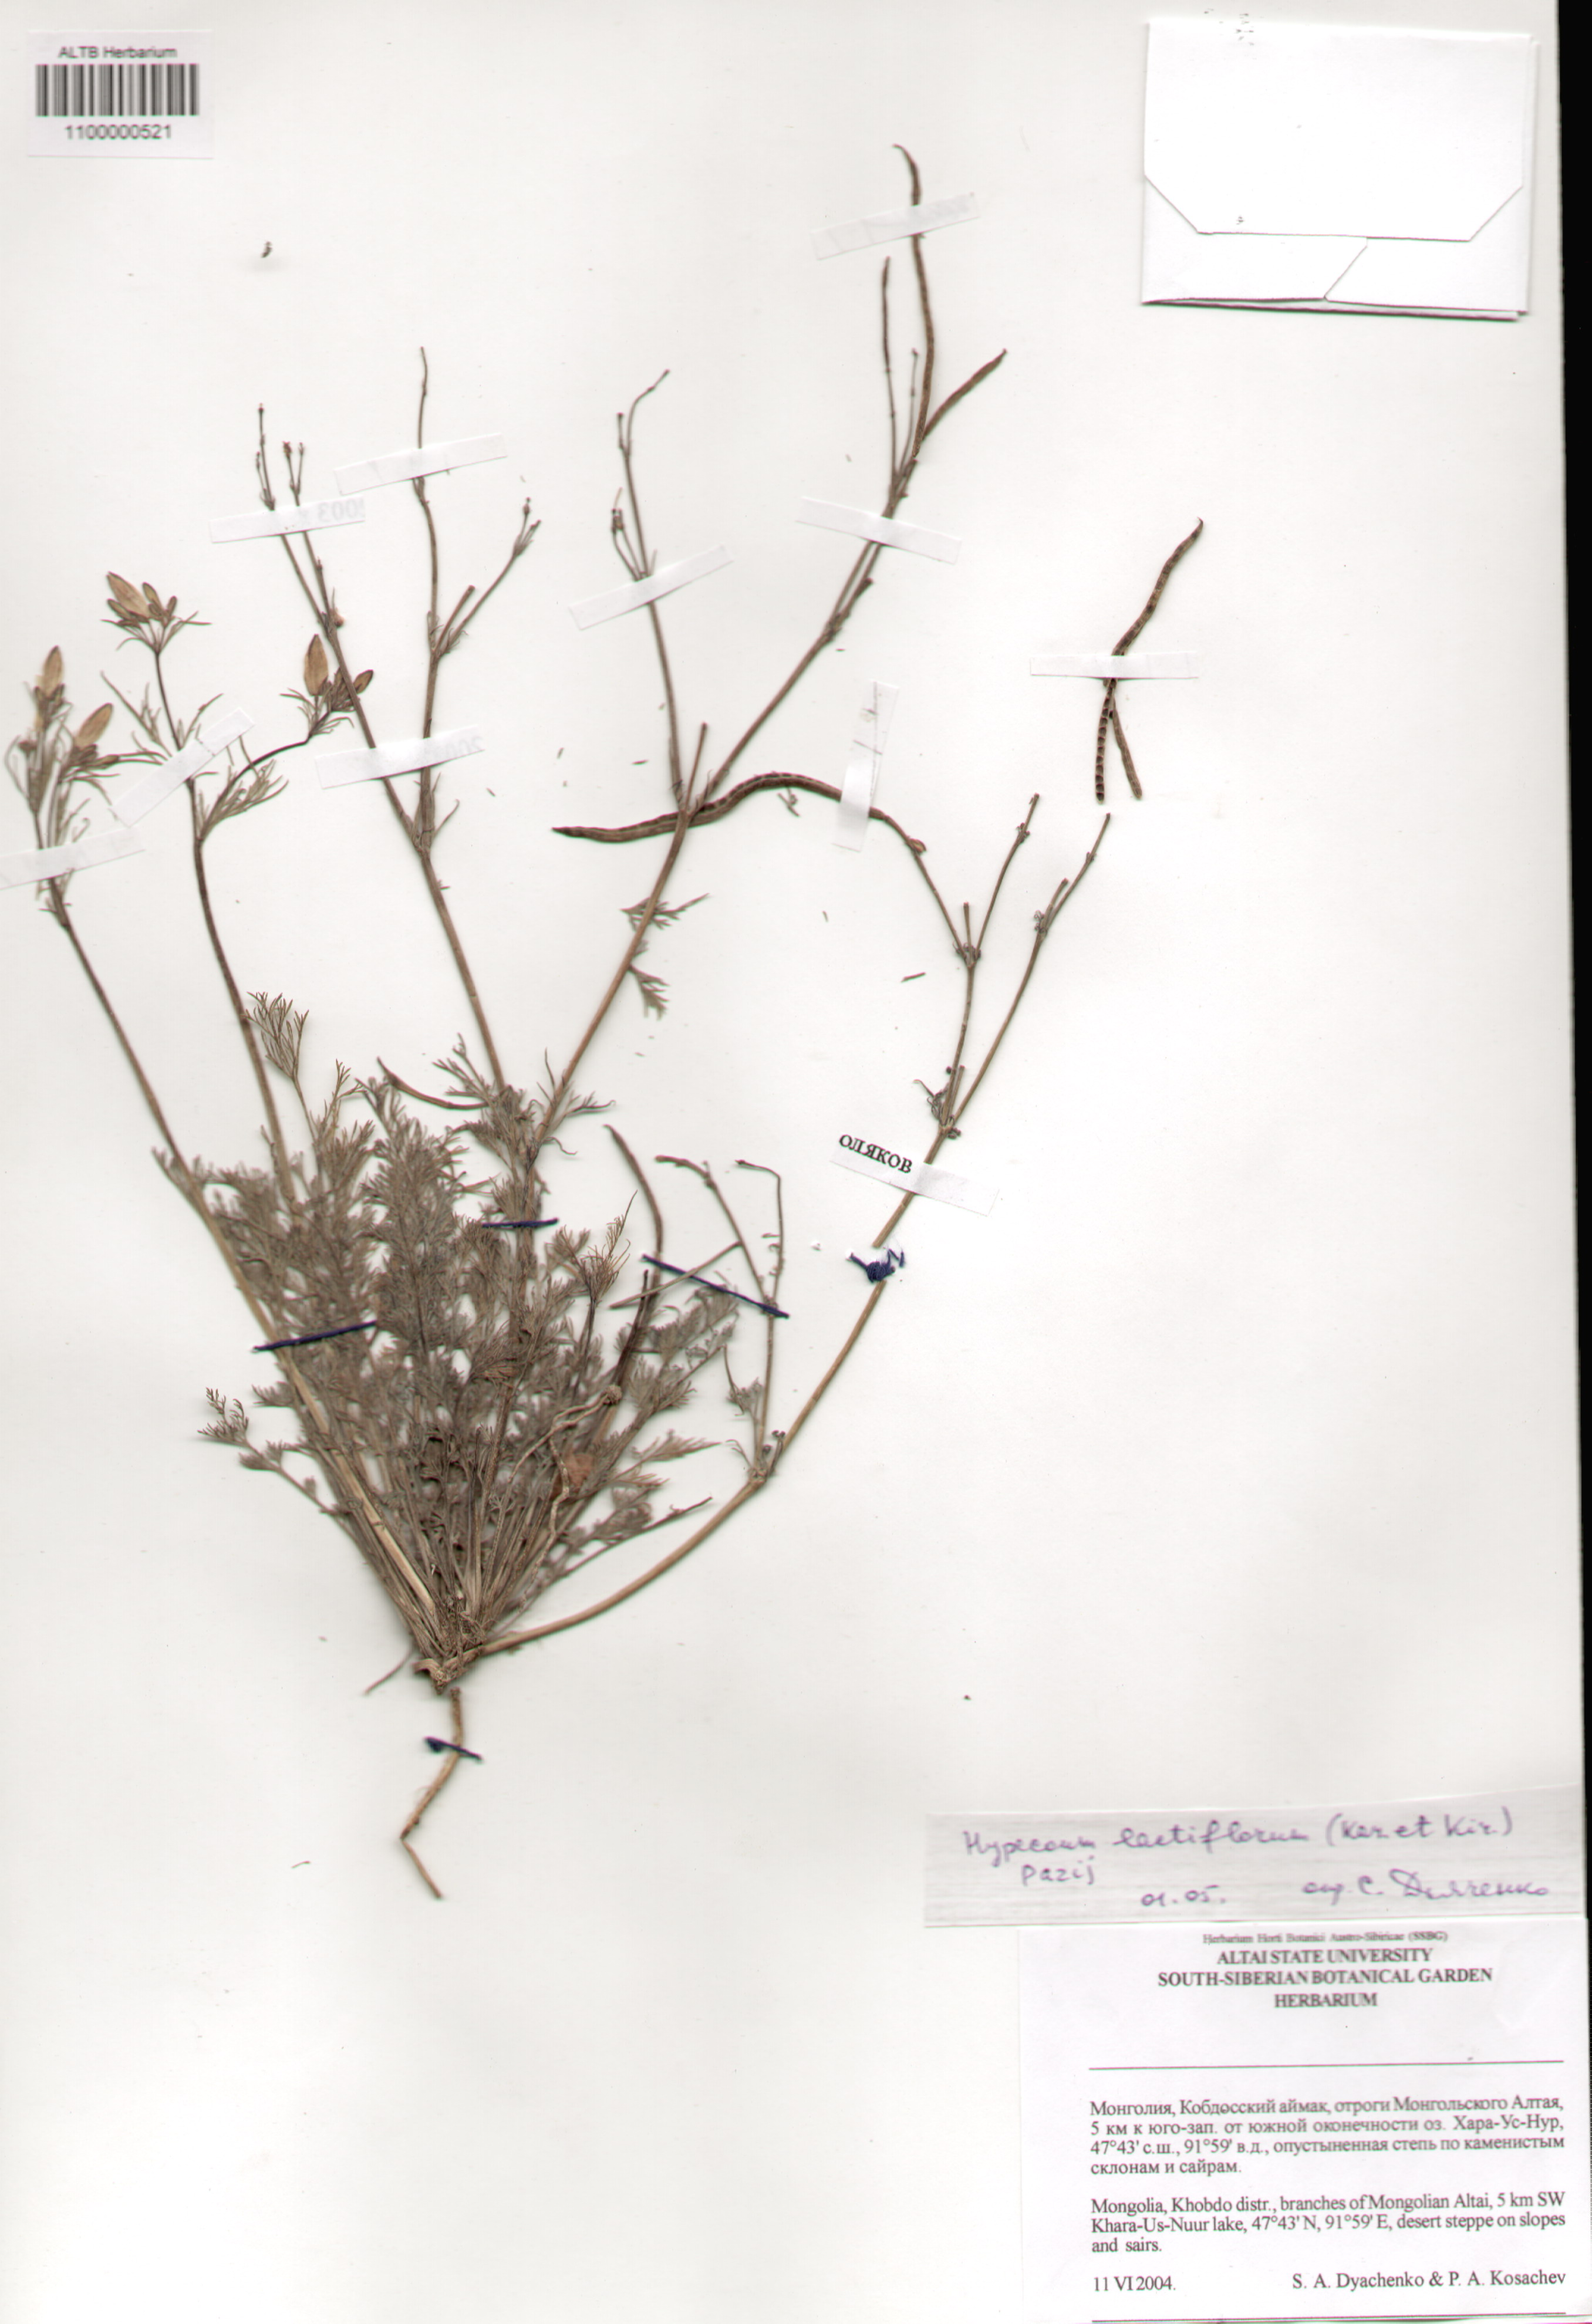 Hypocoaceae,Hypocoum lactiflorum (Kar. et Kir.) Pazij